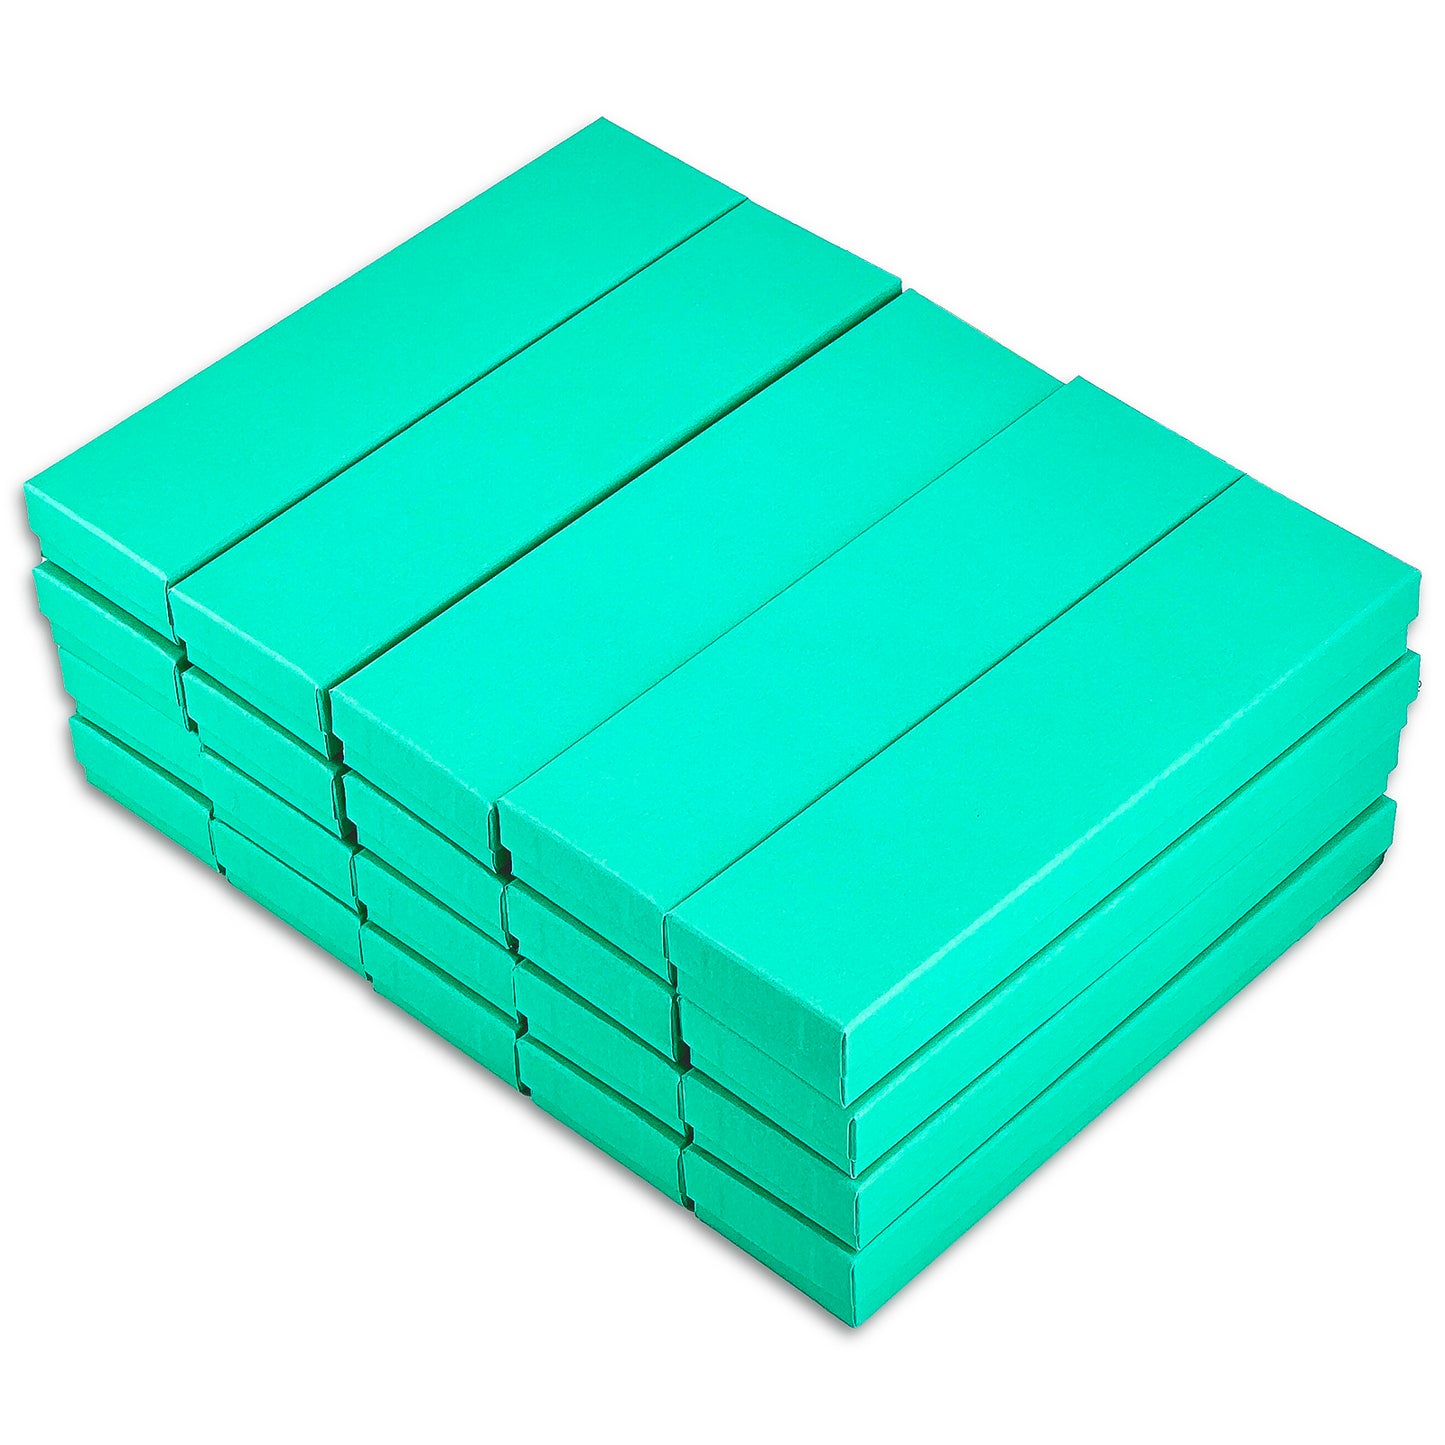 8"x 2"x 1" H Teal Green Paper Bracelet Box